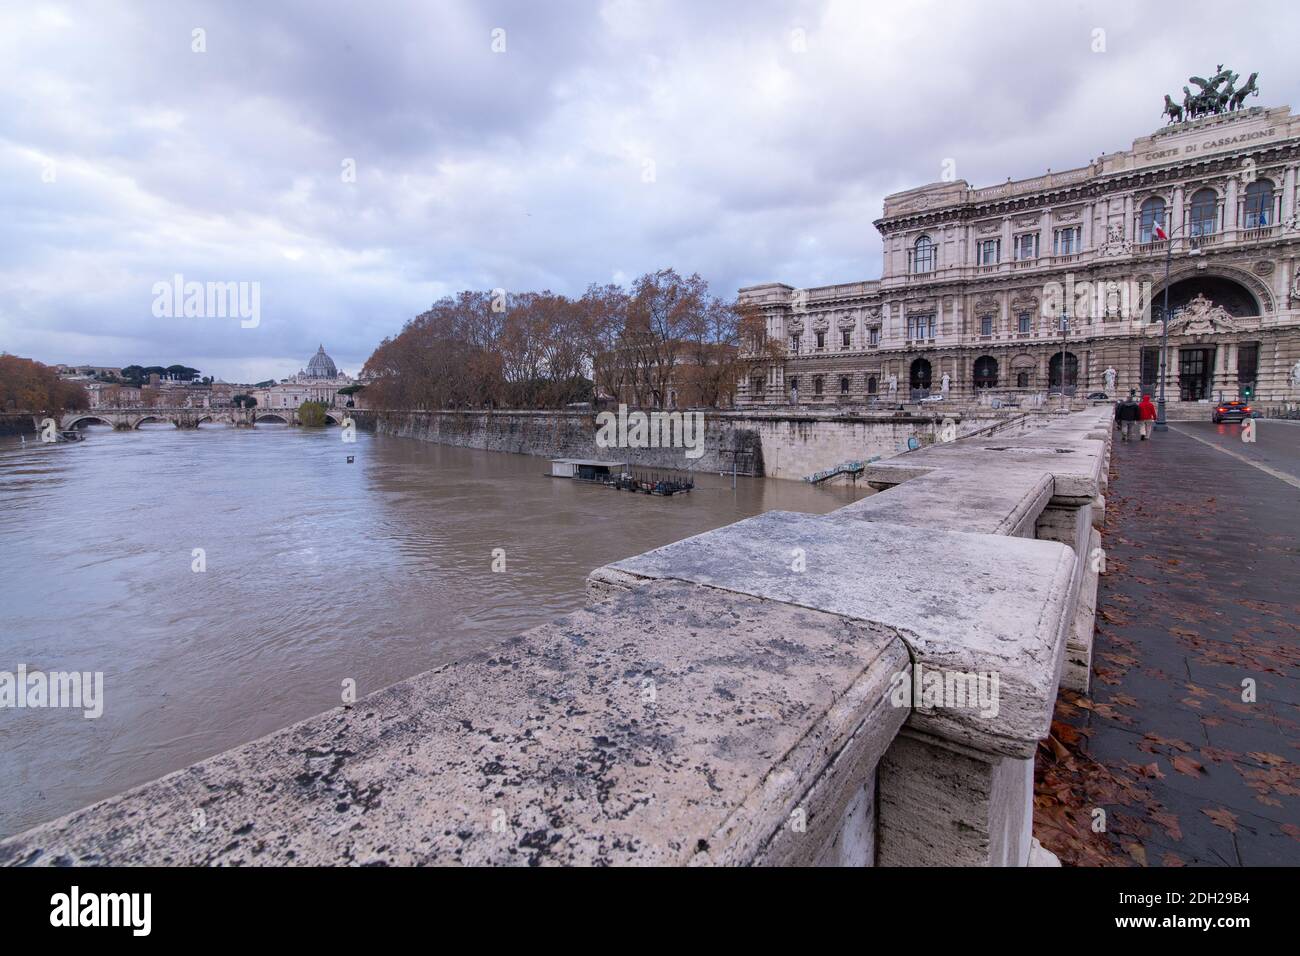 Rom, Italien. Dezember 2020. Blick auf den überfluteten Tiber von der Umberto-Brücke (Foto: Matteo Nardone/Pacific Press) Quelle: Pacific Press Media Production Corp./Alamy Live News Stockfoto